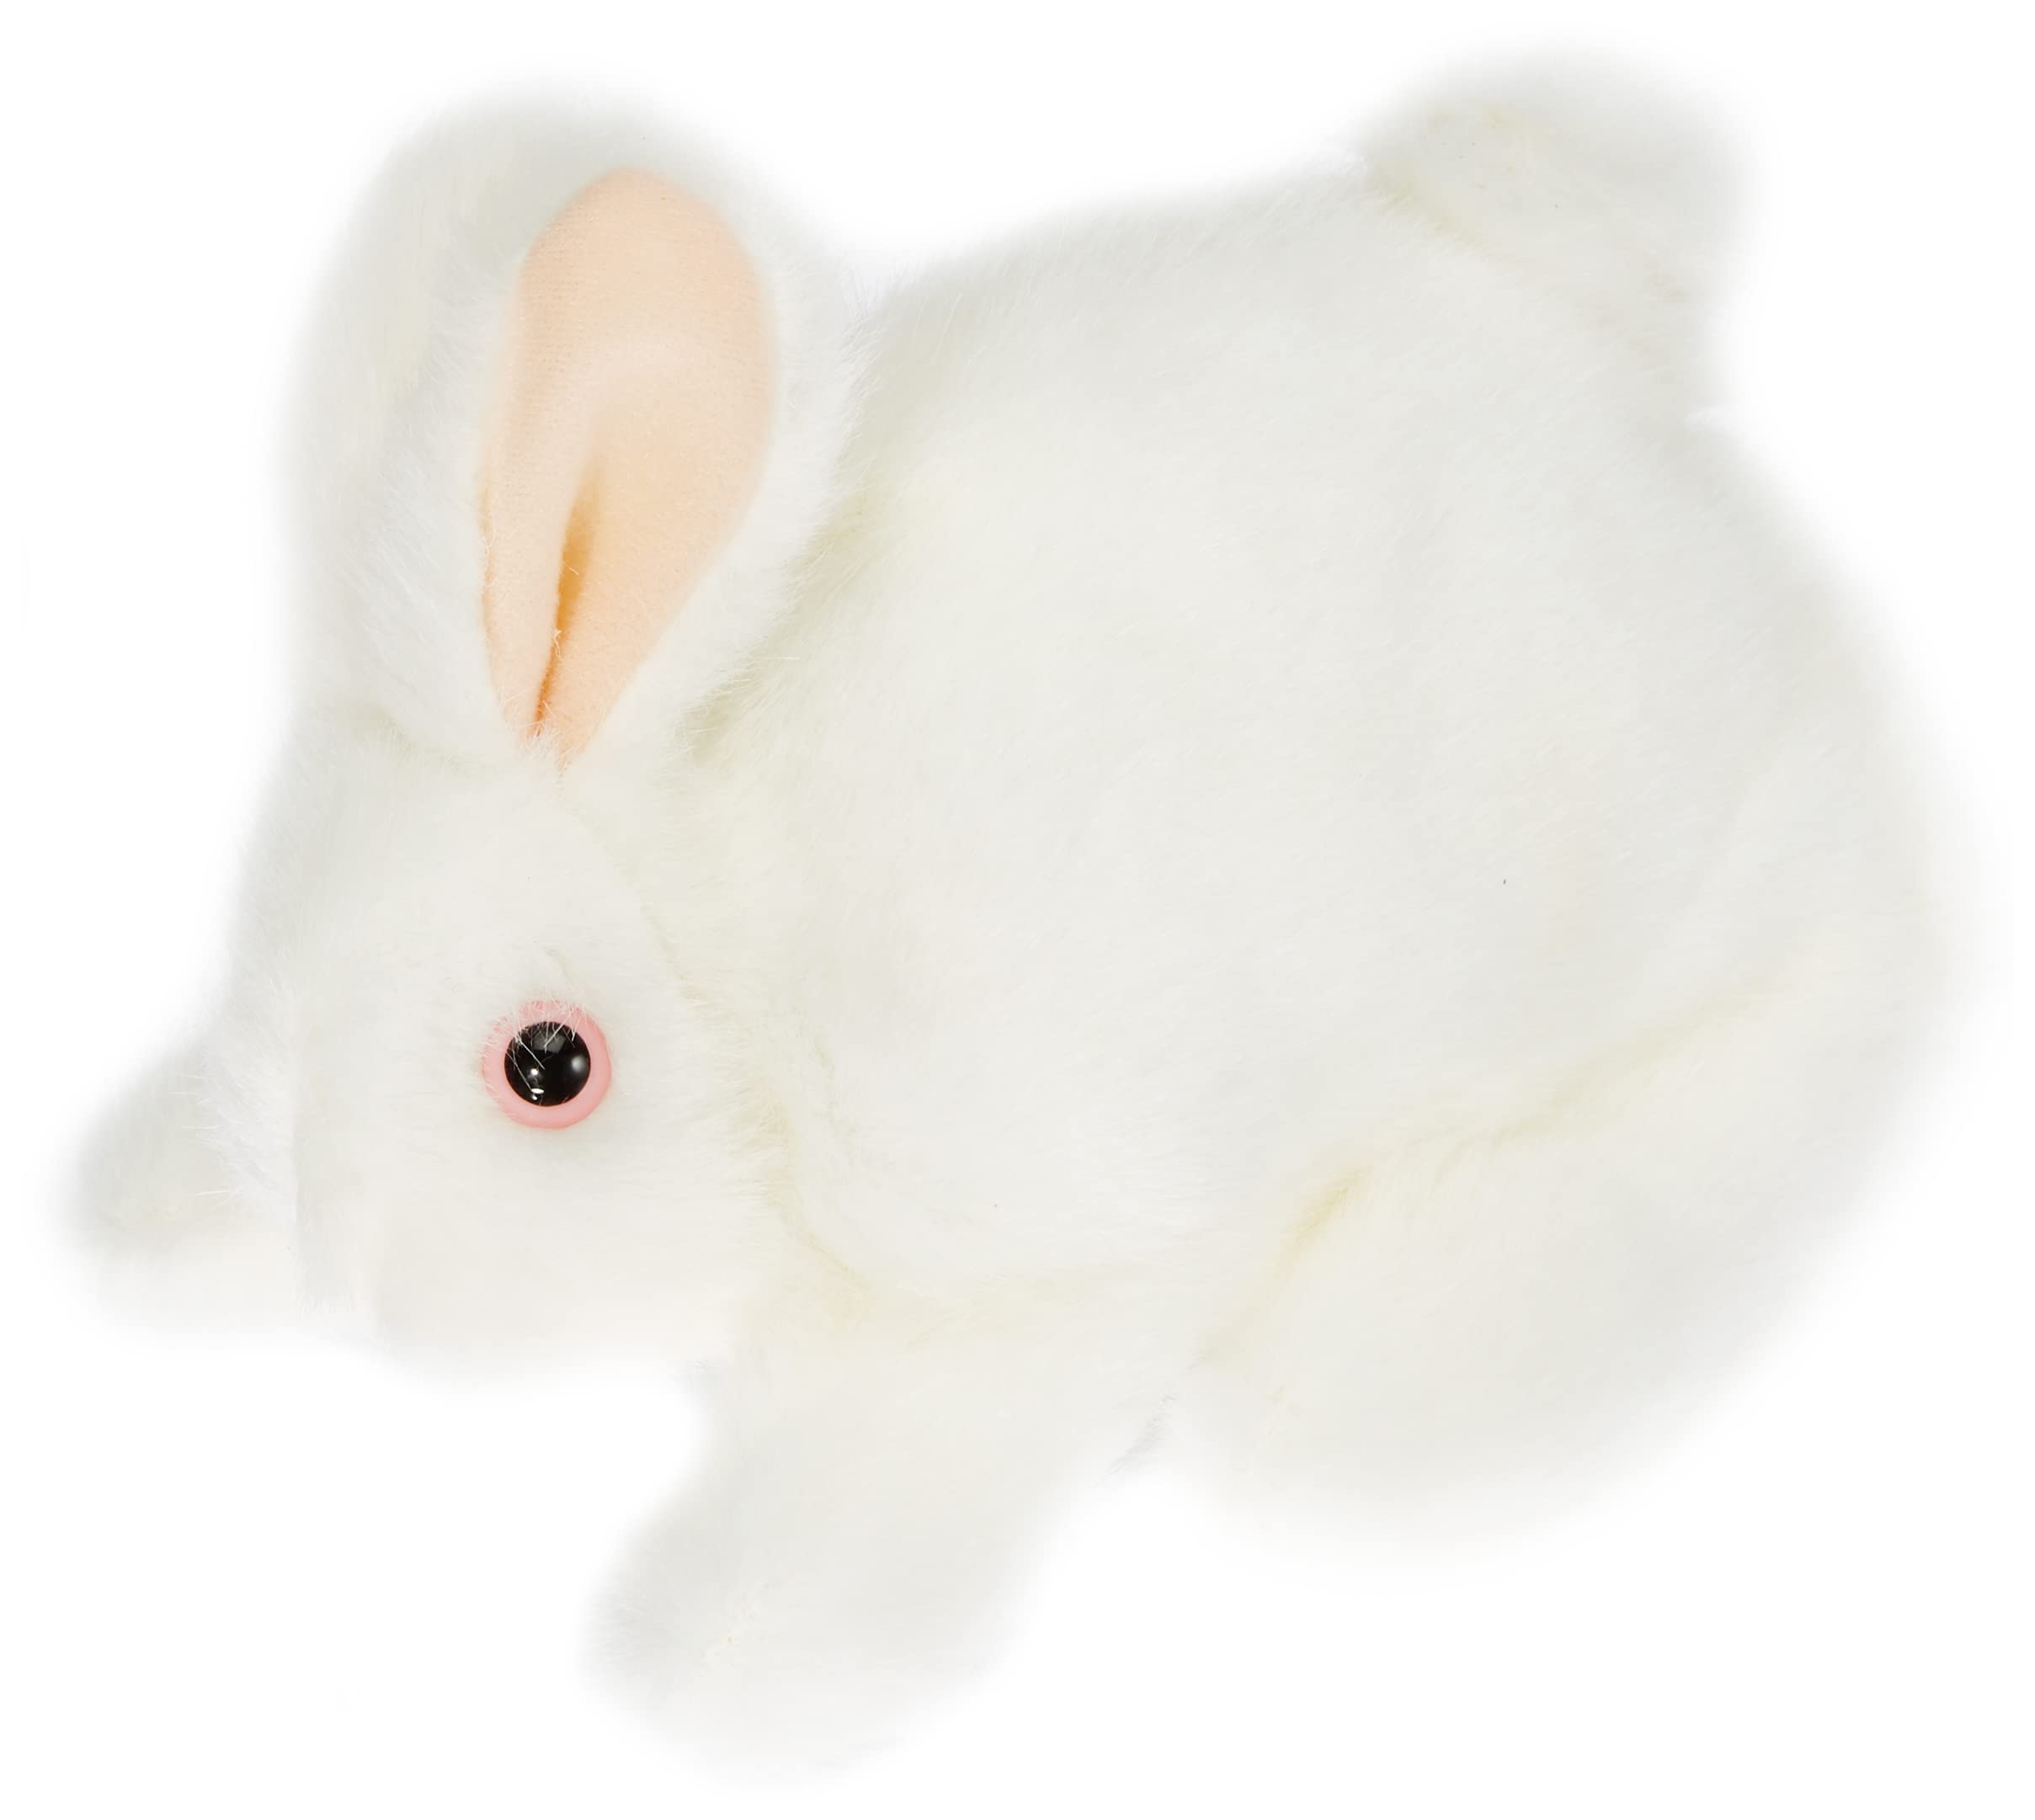 Folkmanis White Bunny Rabbit Hand Puppet